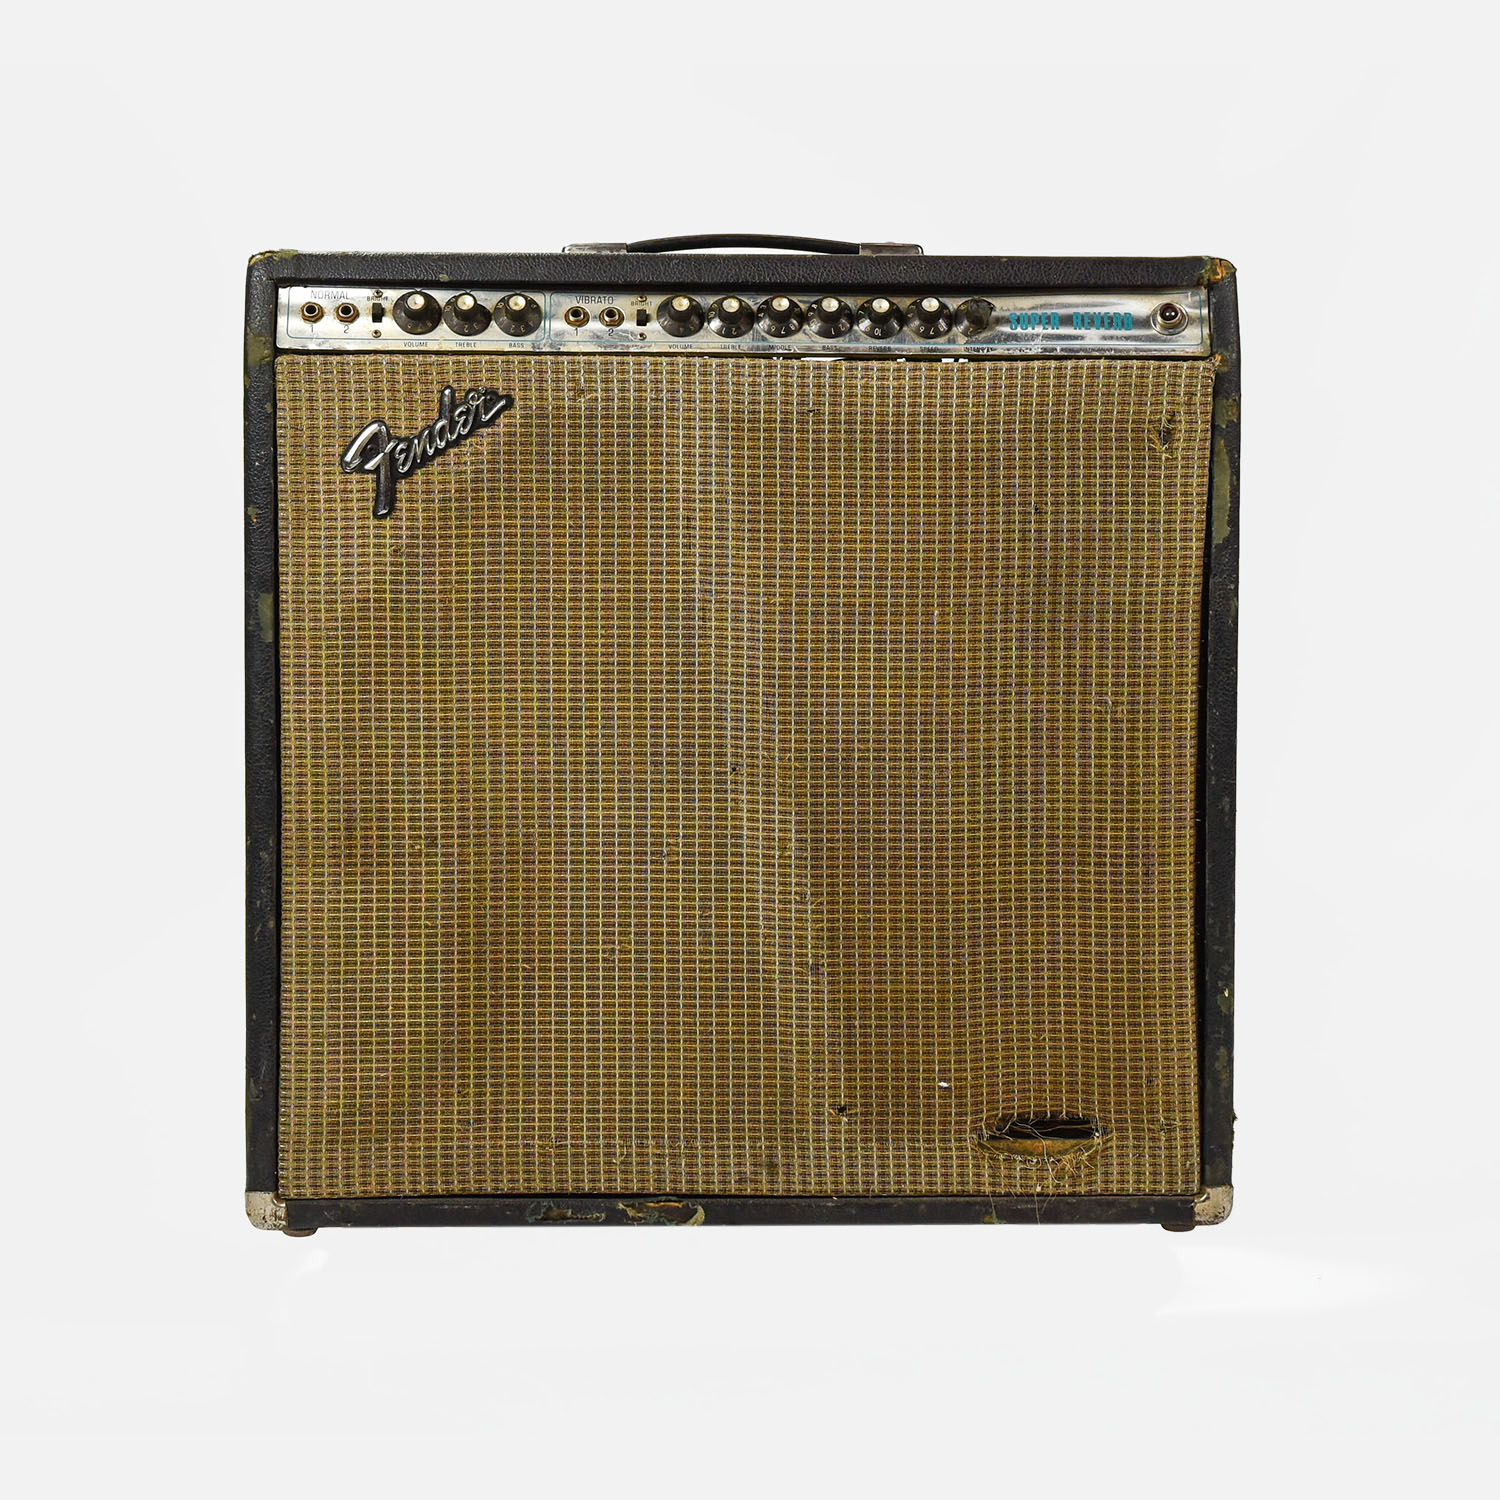 Original Fender Super Reverb Tube Amplifier